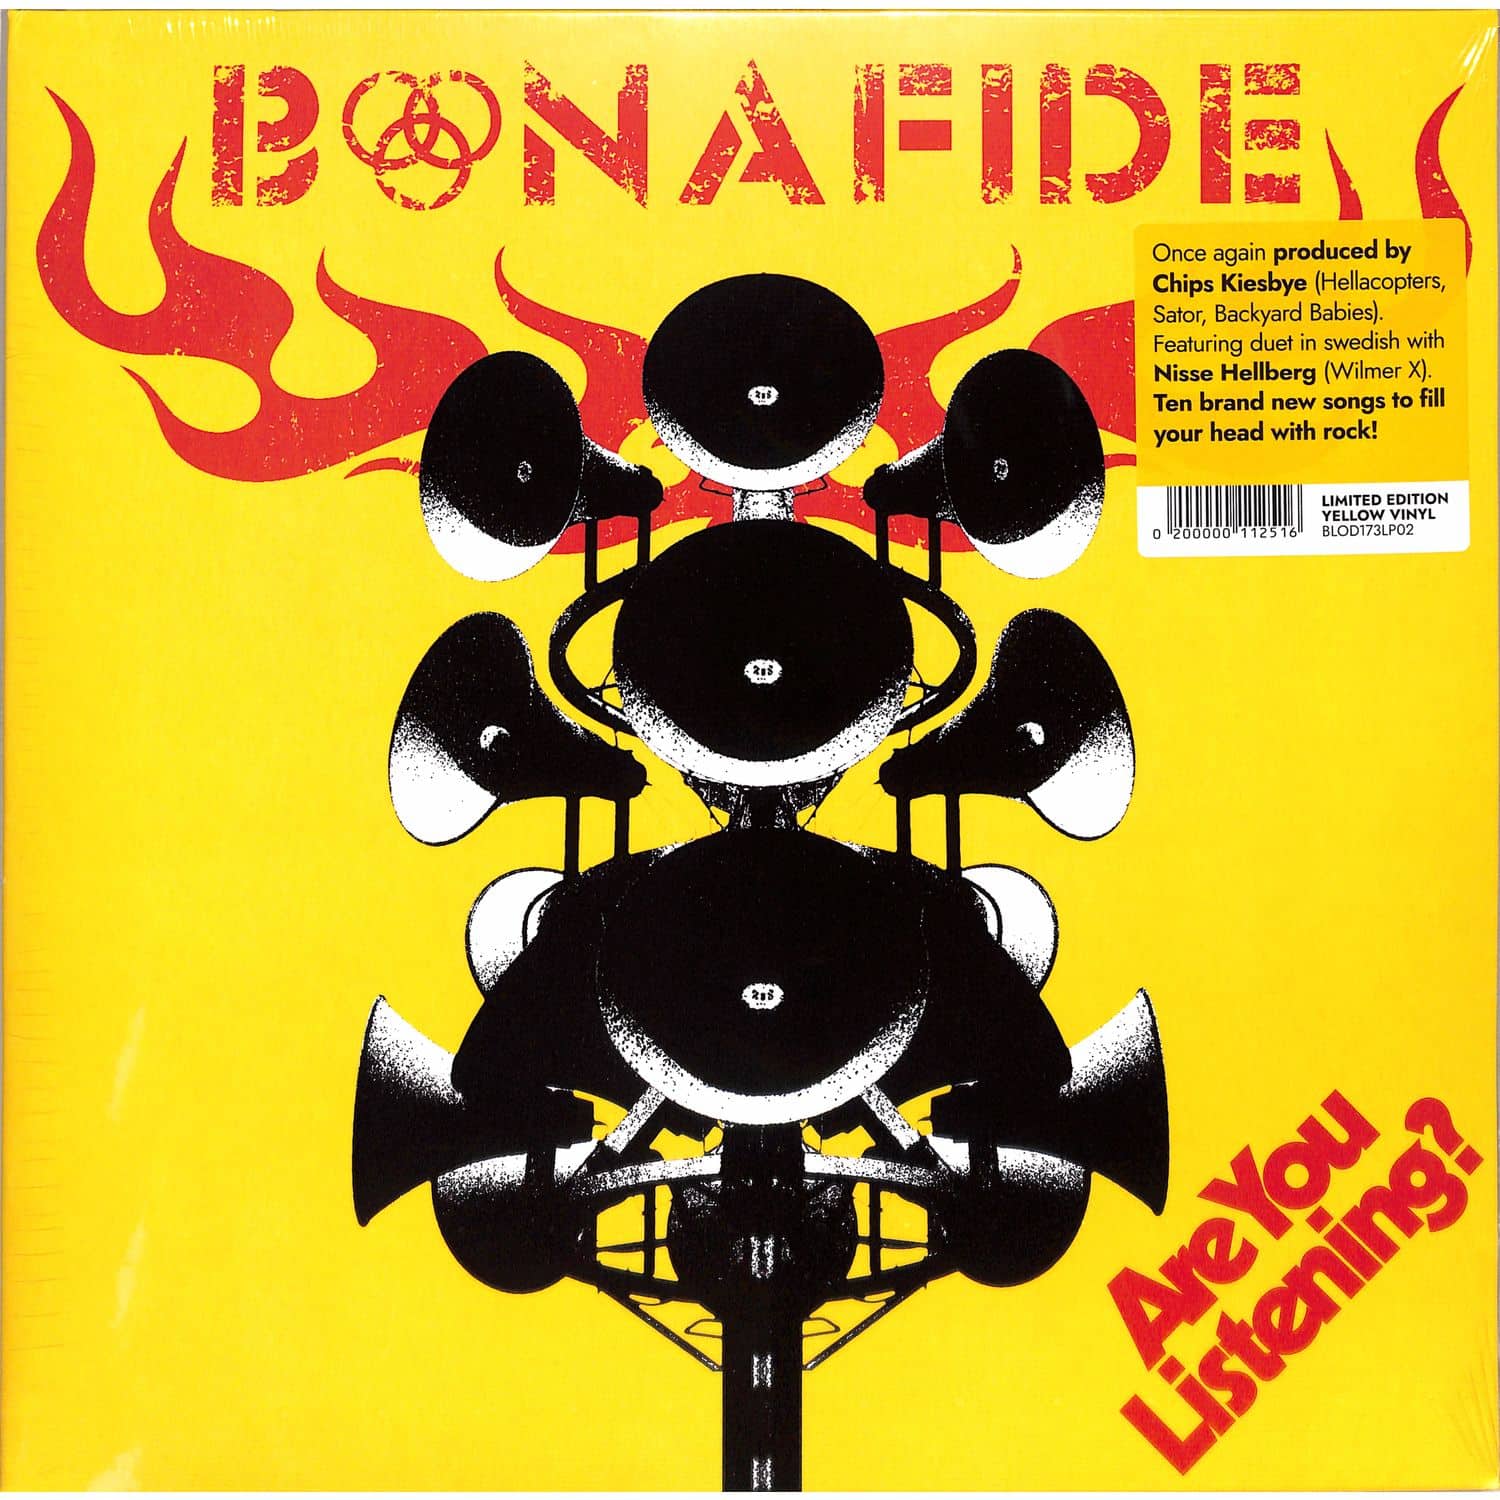 Bonafide - ARE YOU LISTENING? 